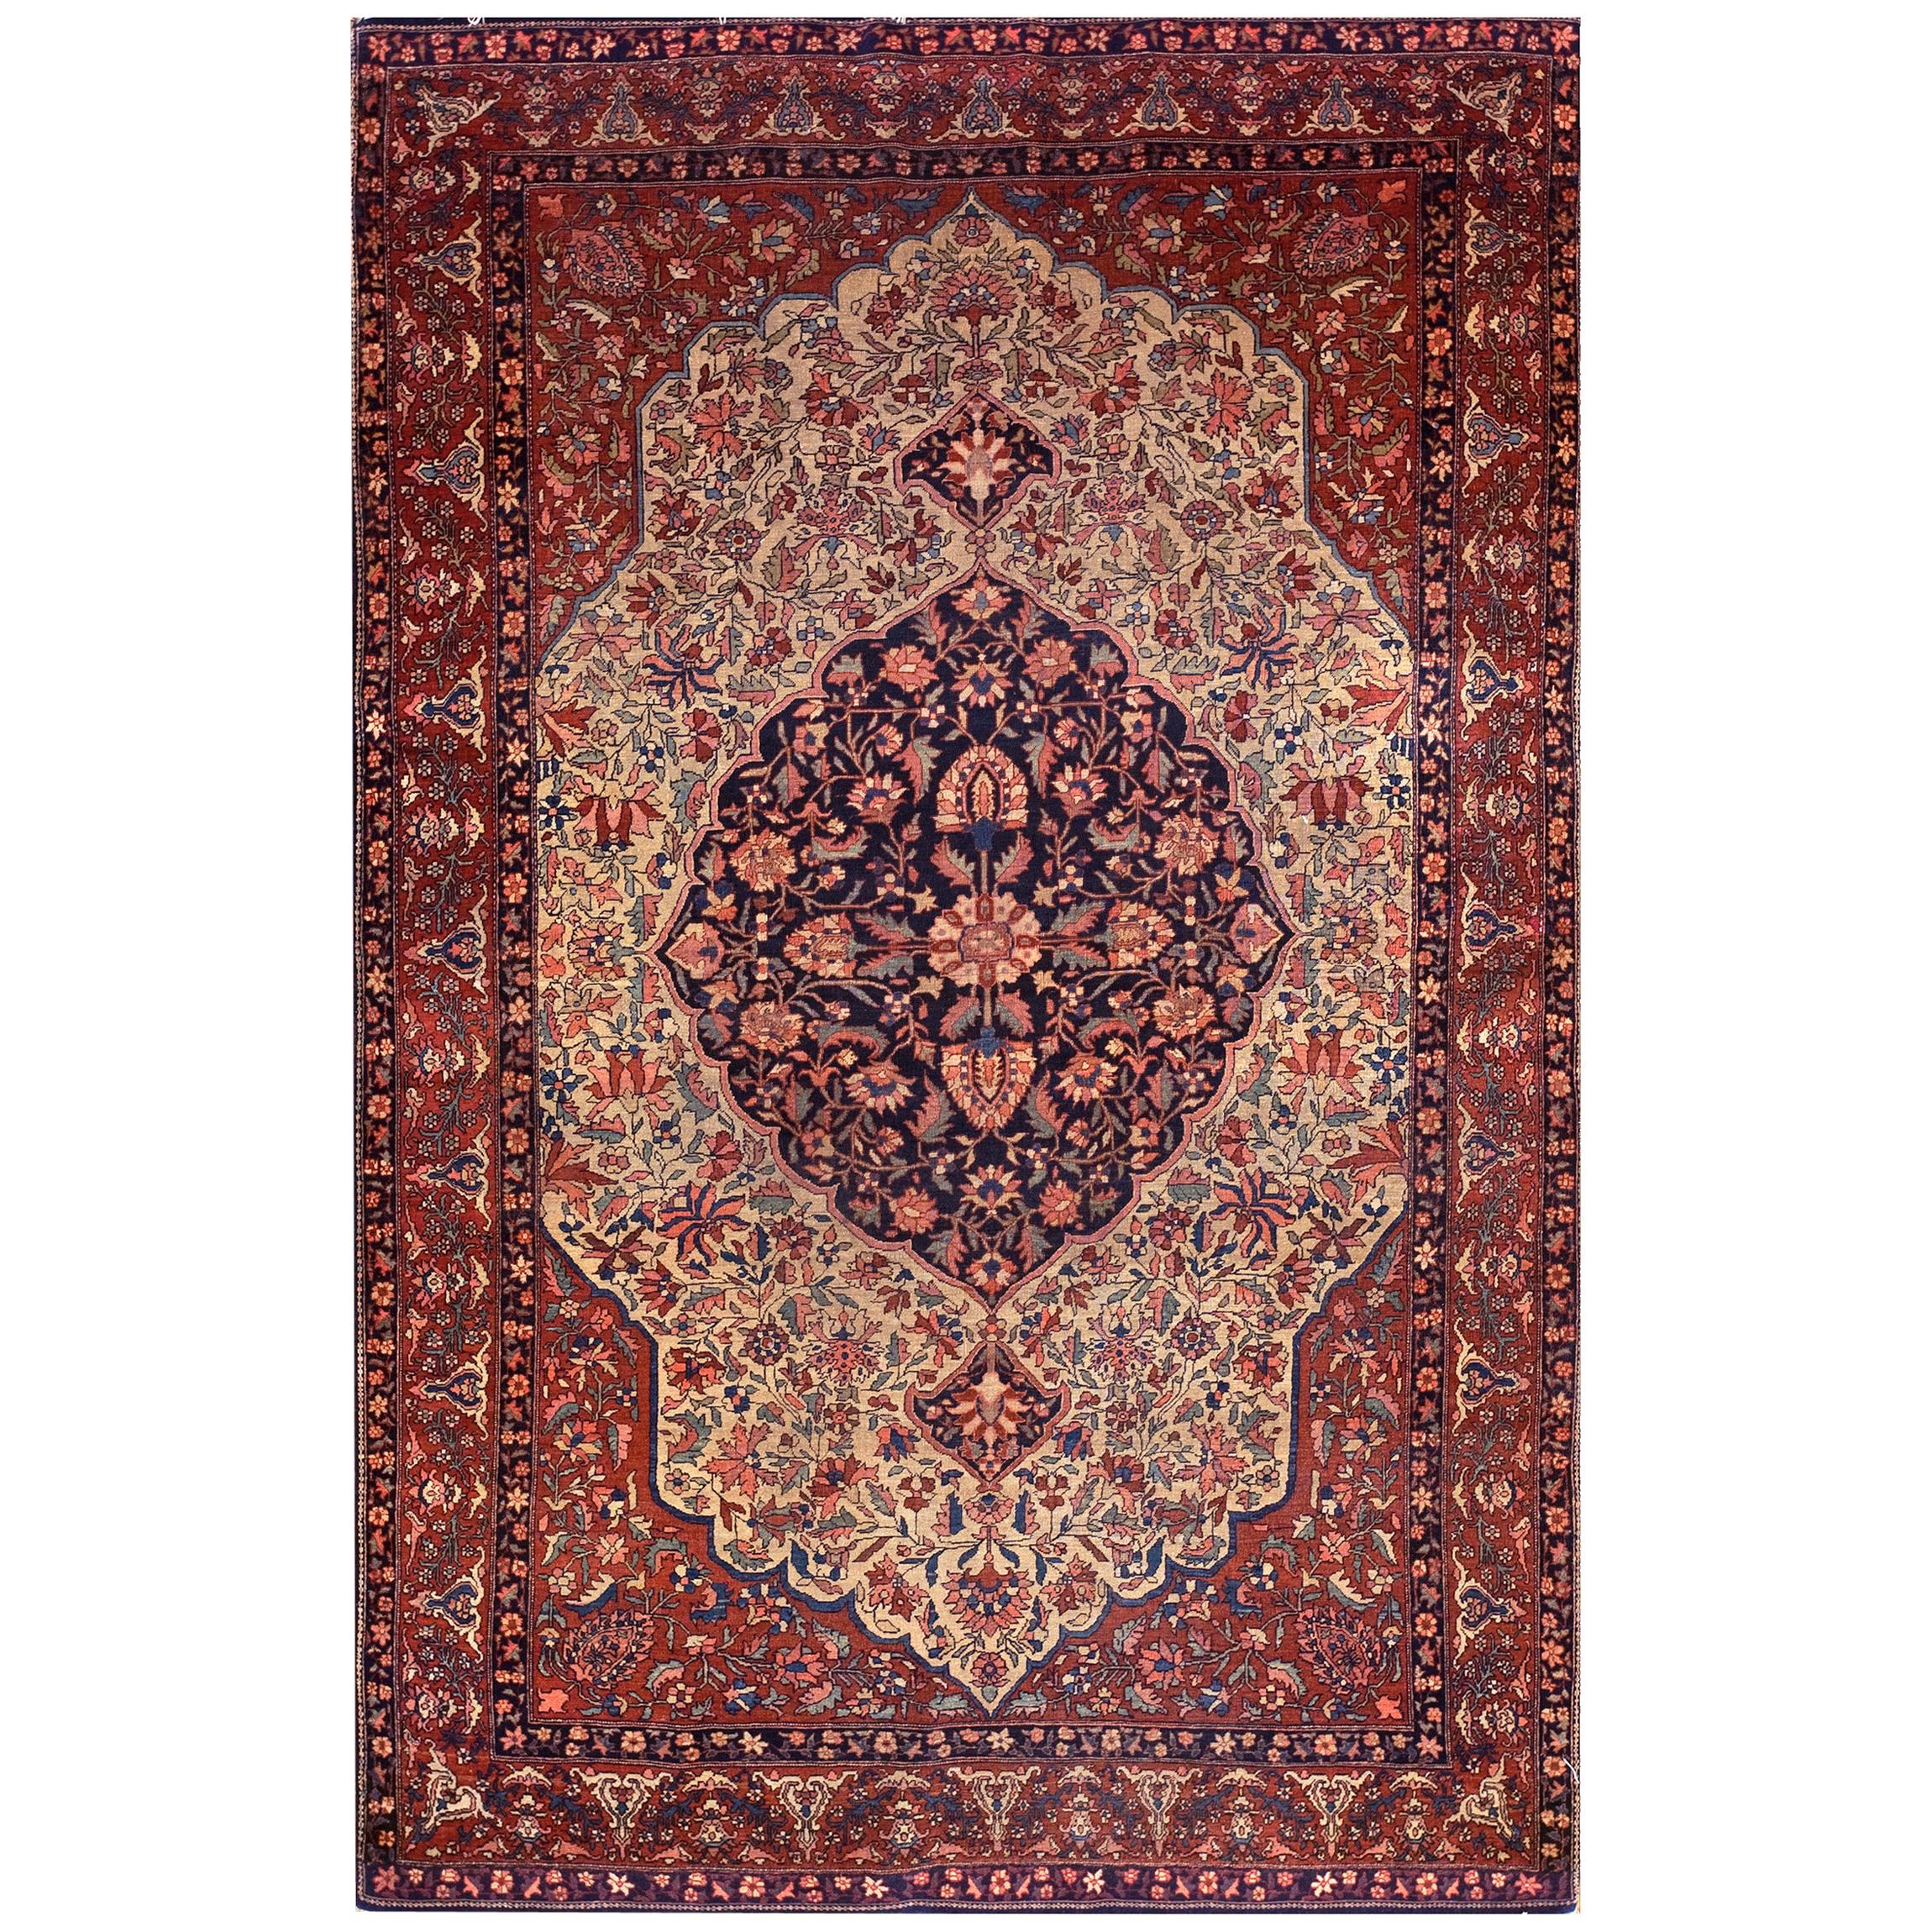 Early 20th Century Persian Sarouk Farahan Carpet ( 4'5" x 6'10" x 135 x 208 )